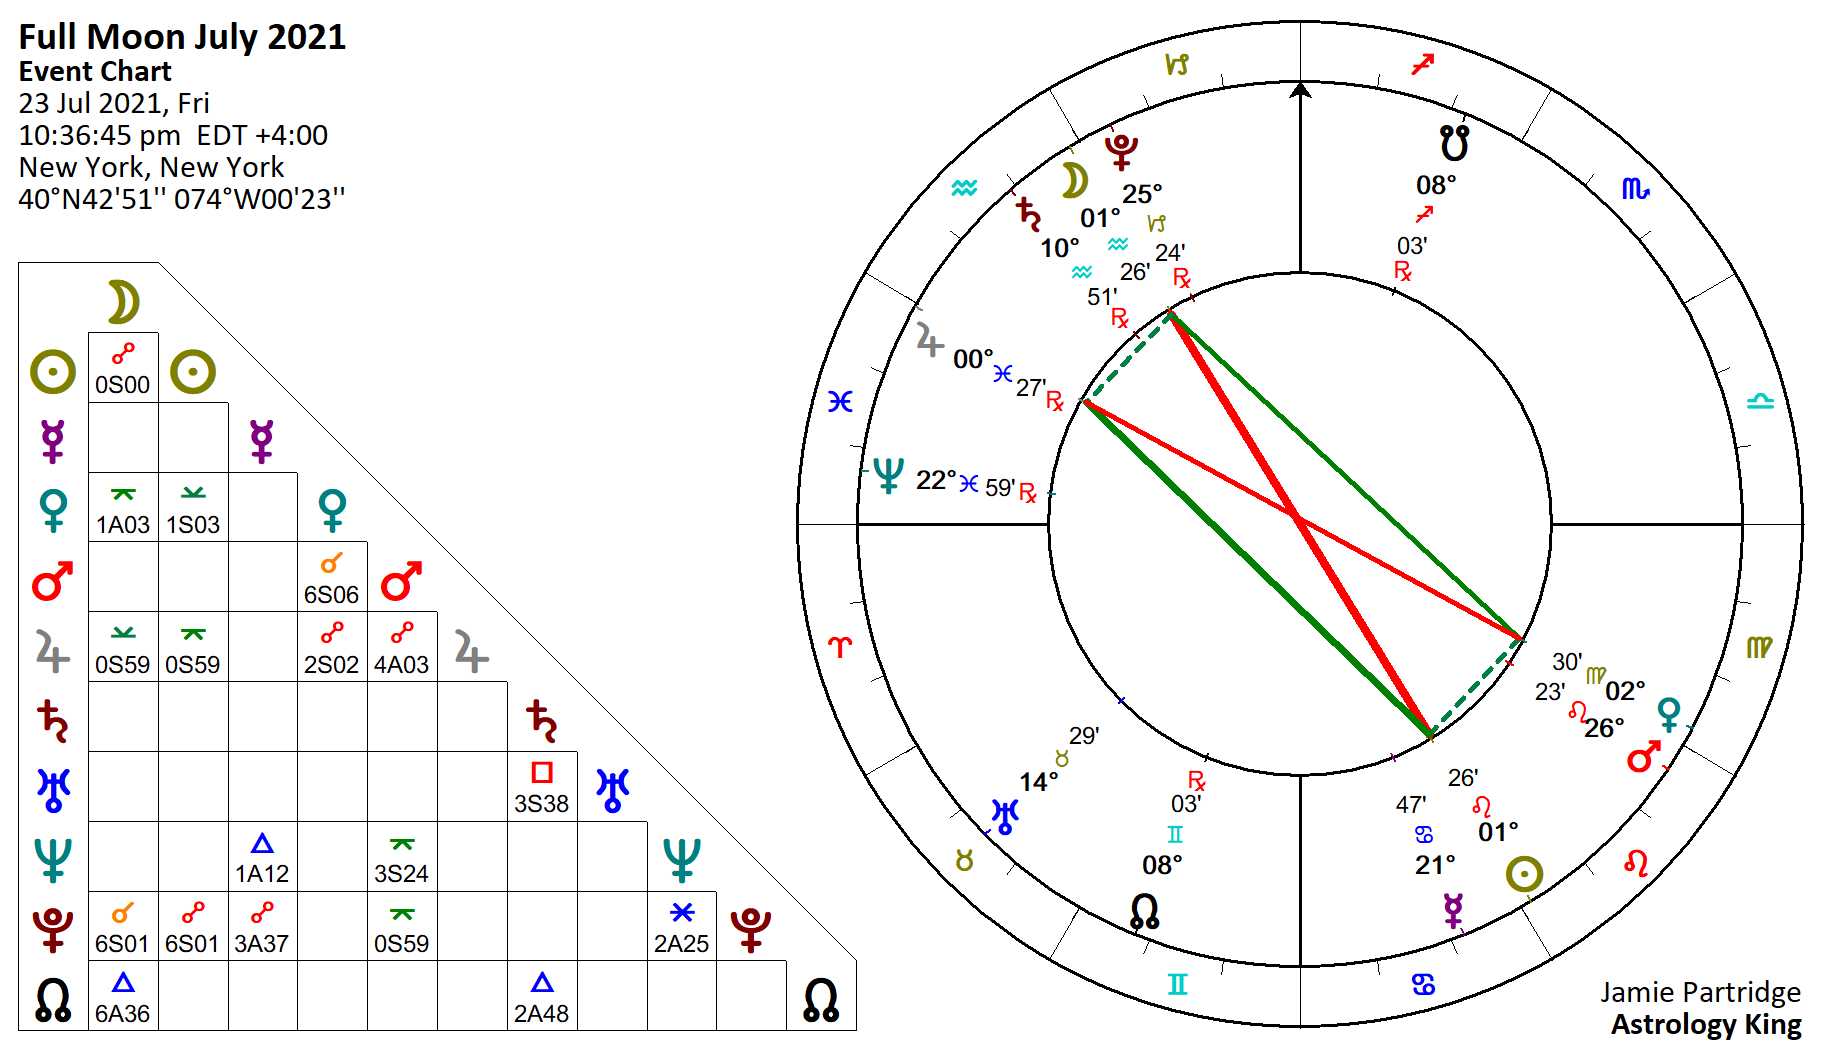 Full Moon July 21 Relationship Irritants Astrology King